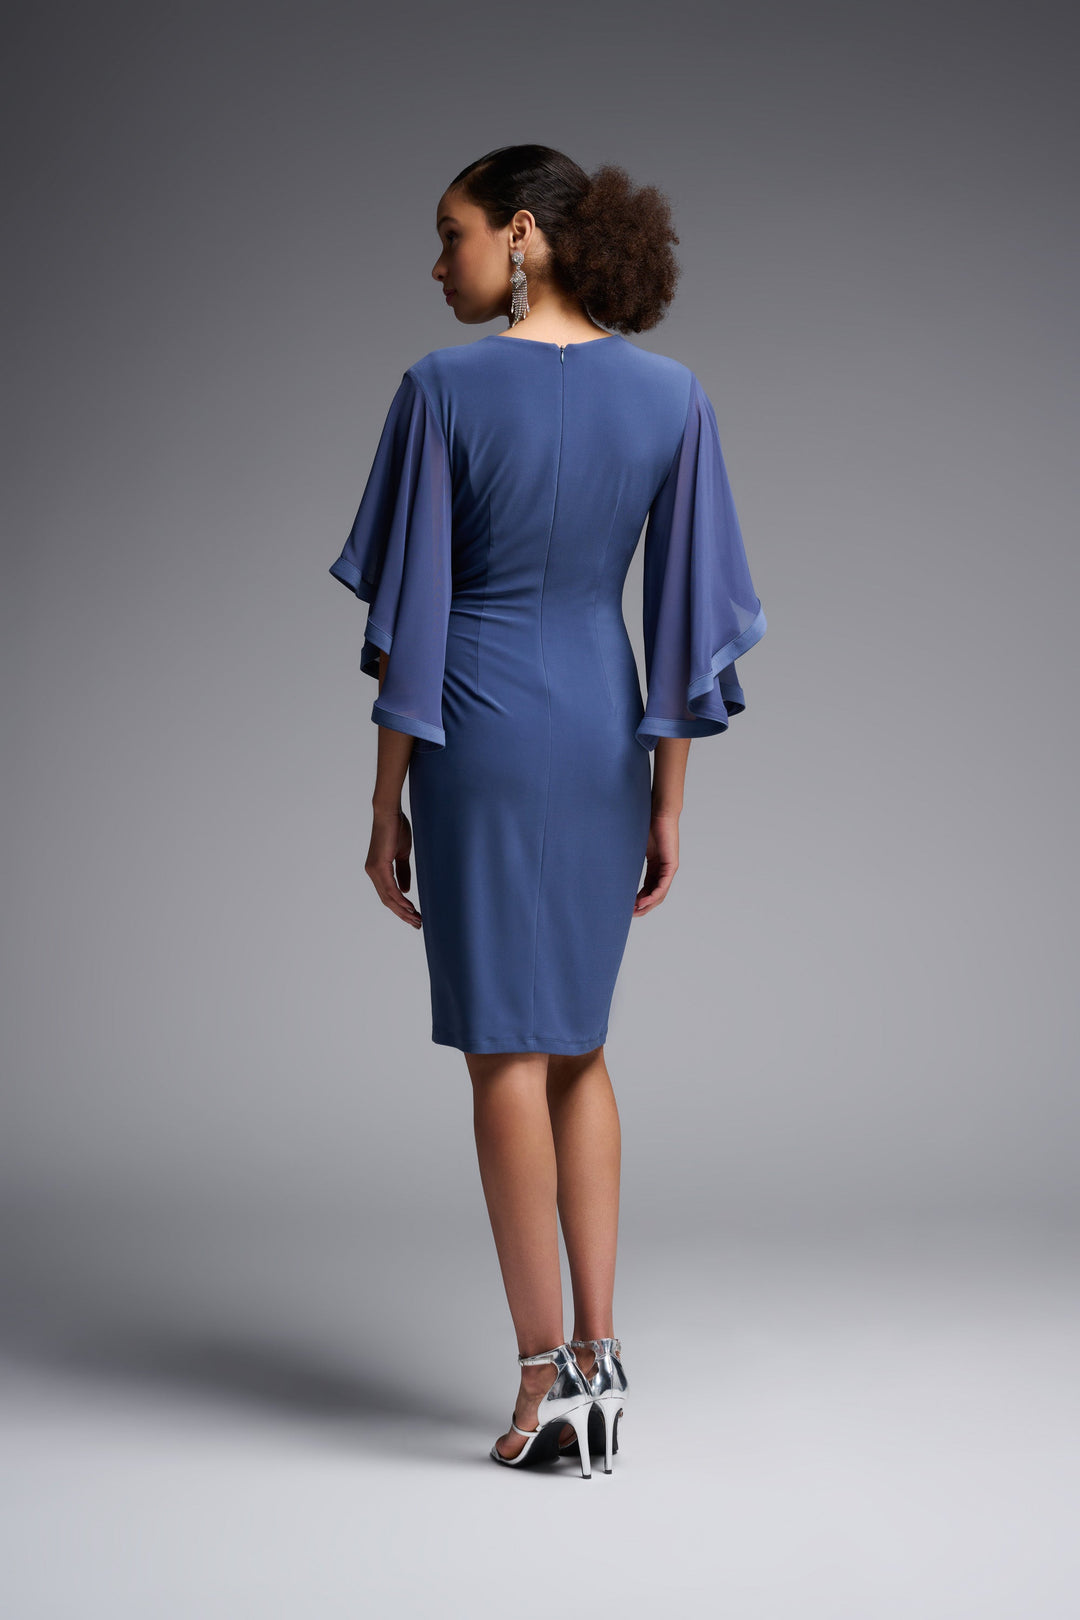 Joseph Ribkoff Dress Style 231771